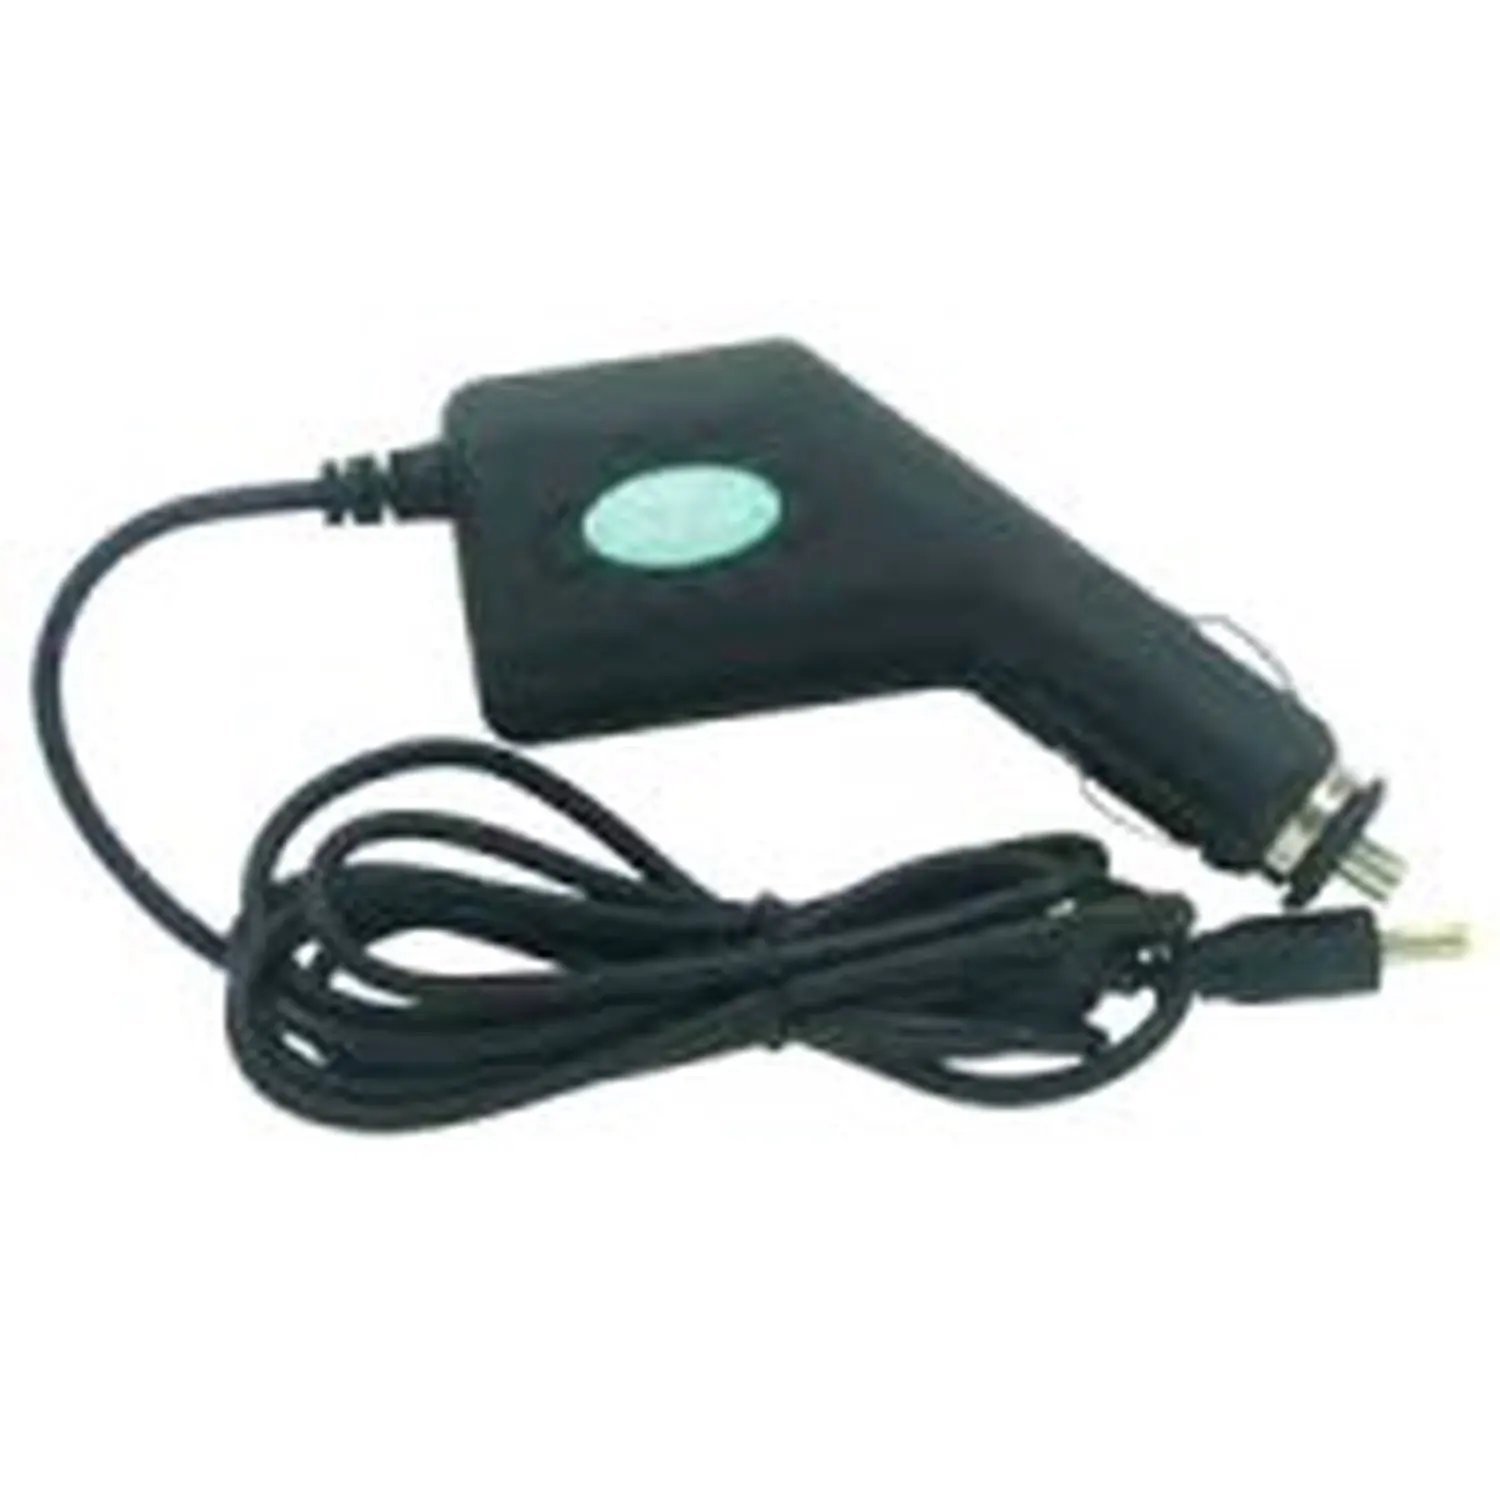 Автомобильное зарядное устройство для SONY PSP и PSP2000 / SLIM / PSP 3000 / PSP street